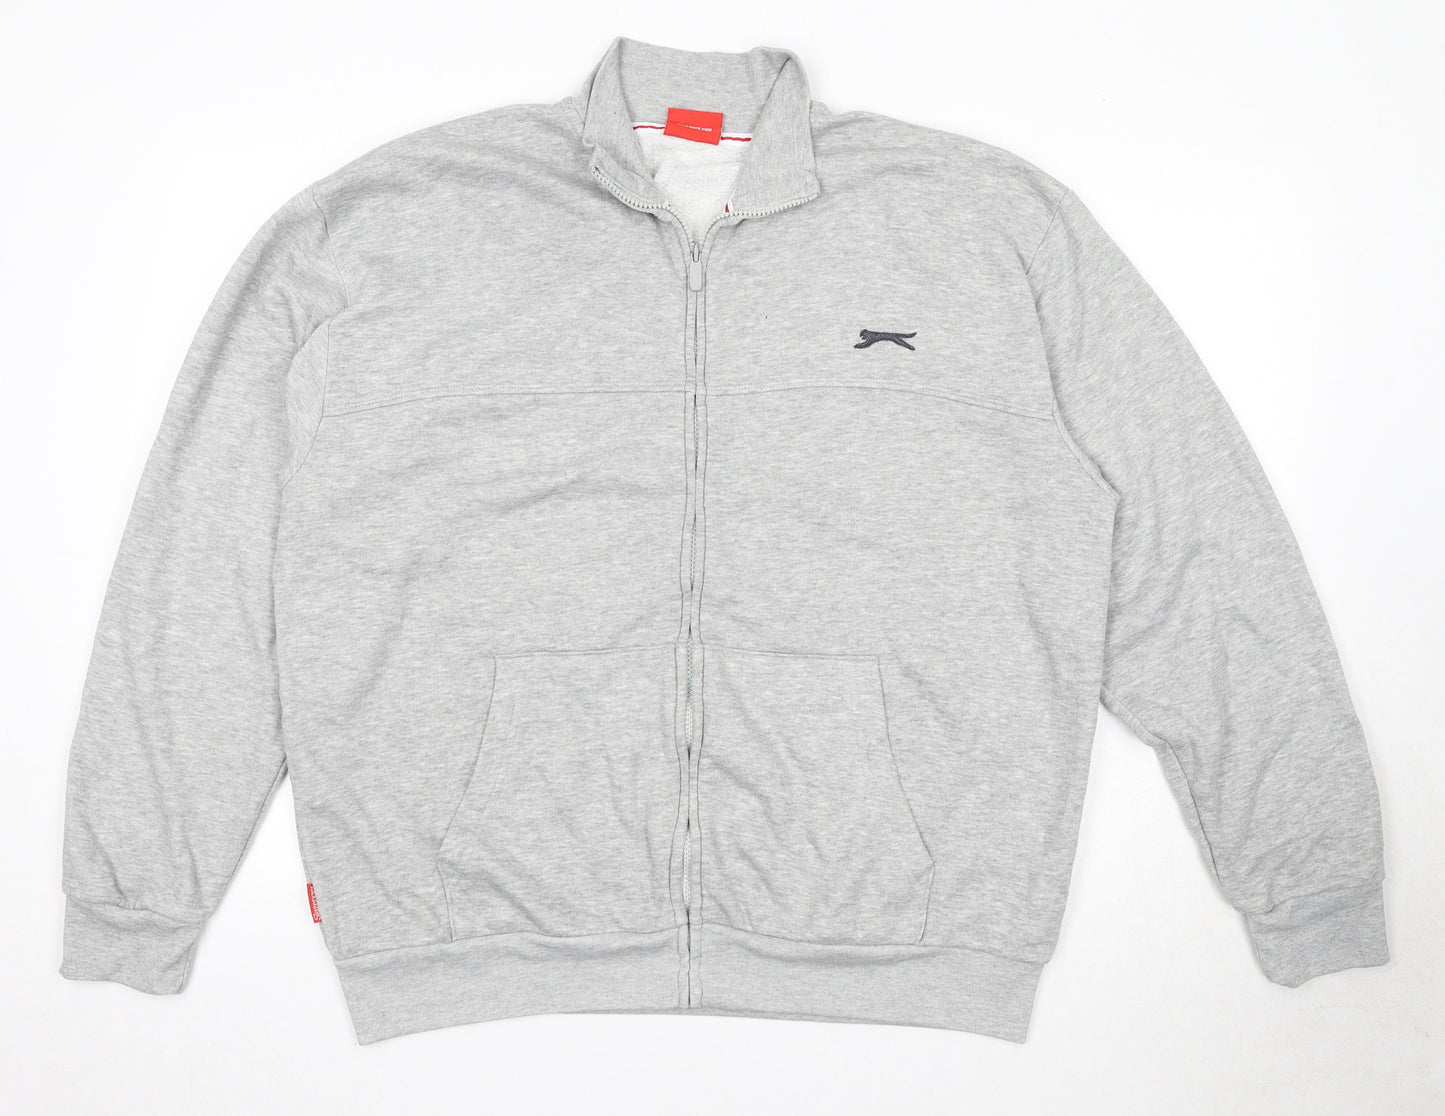 Slazenger Mens Grey Polyester Full Zip Sweatshirt Size XL